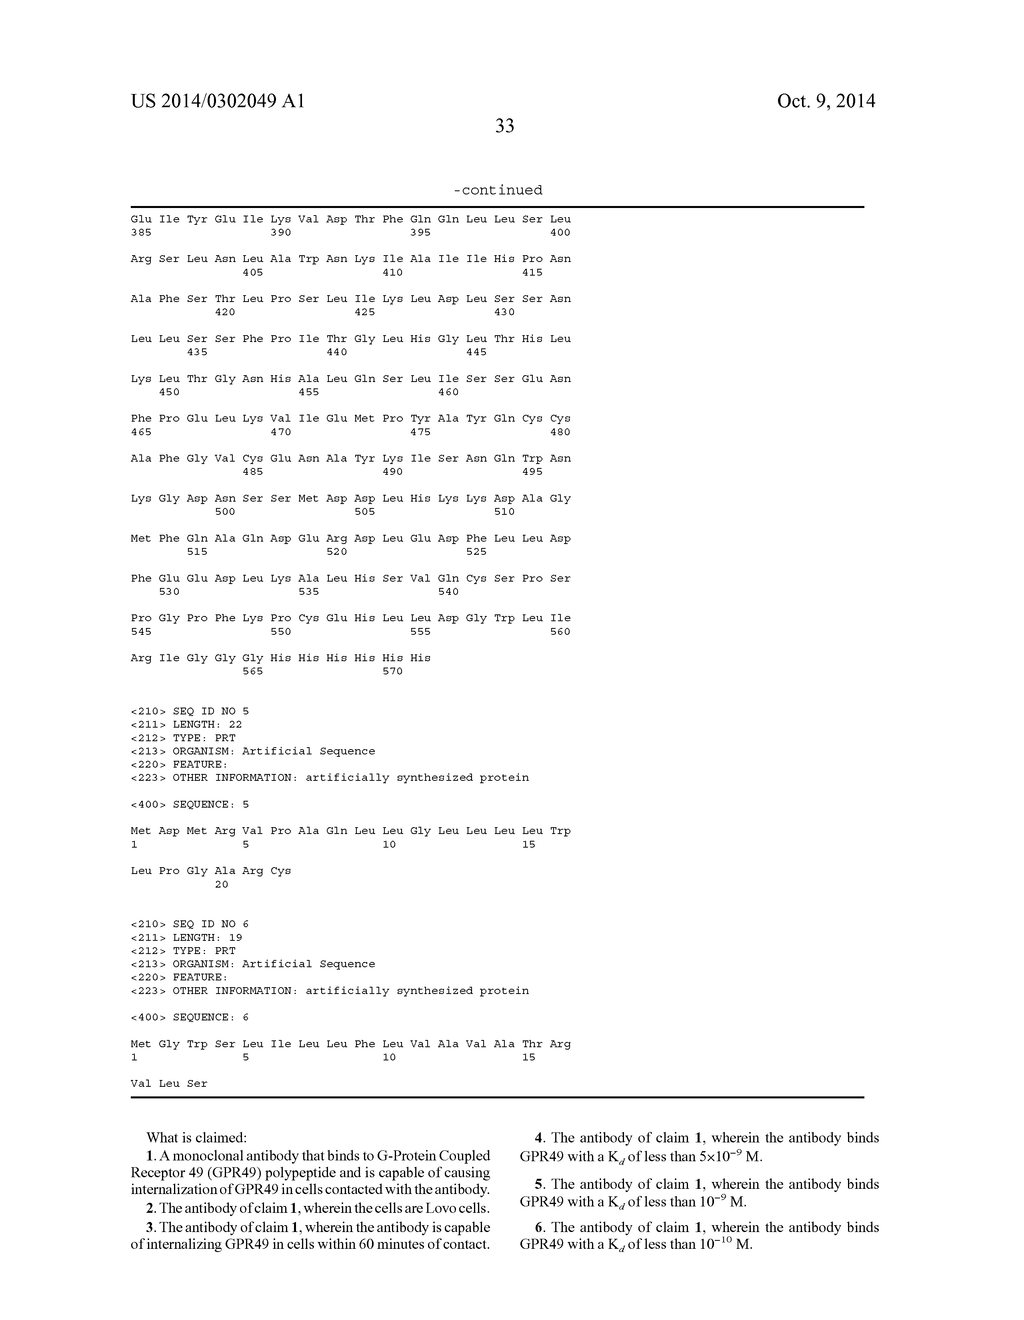 ANTI-GPR49 ANTIBODIES - diagram, schematic, and image 68